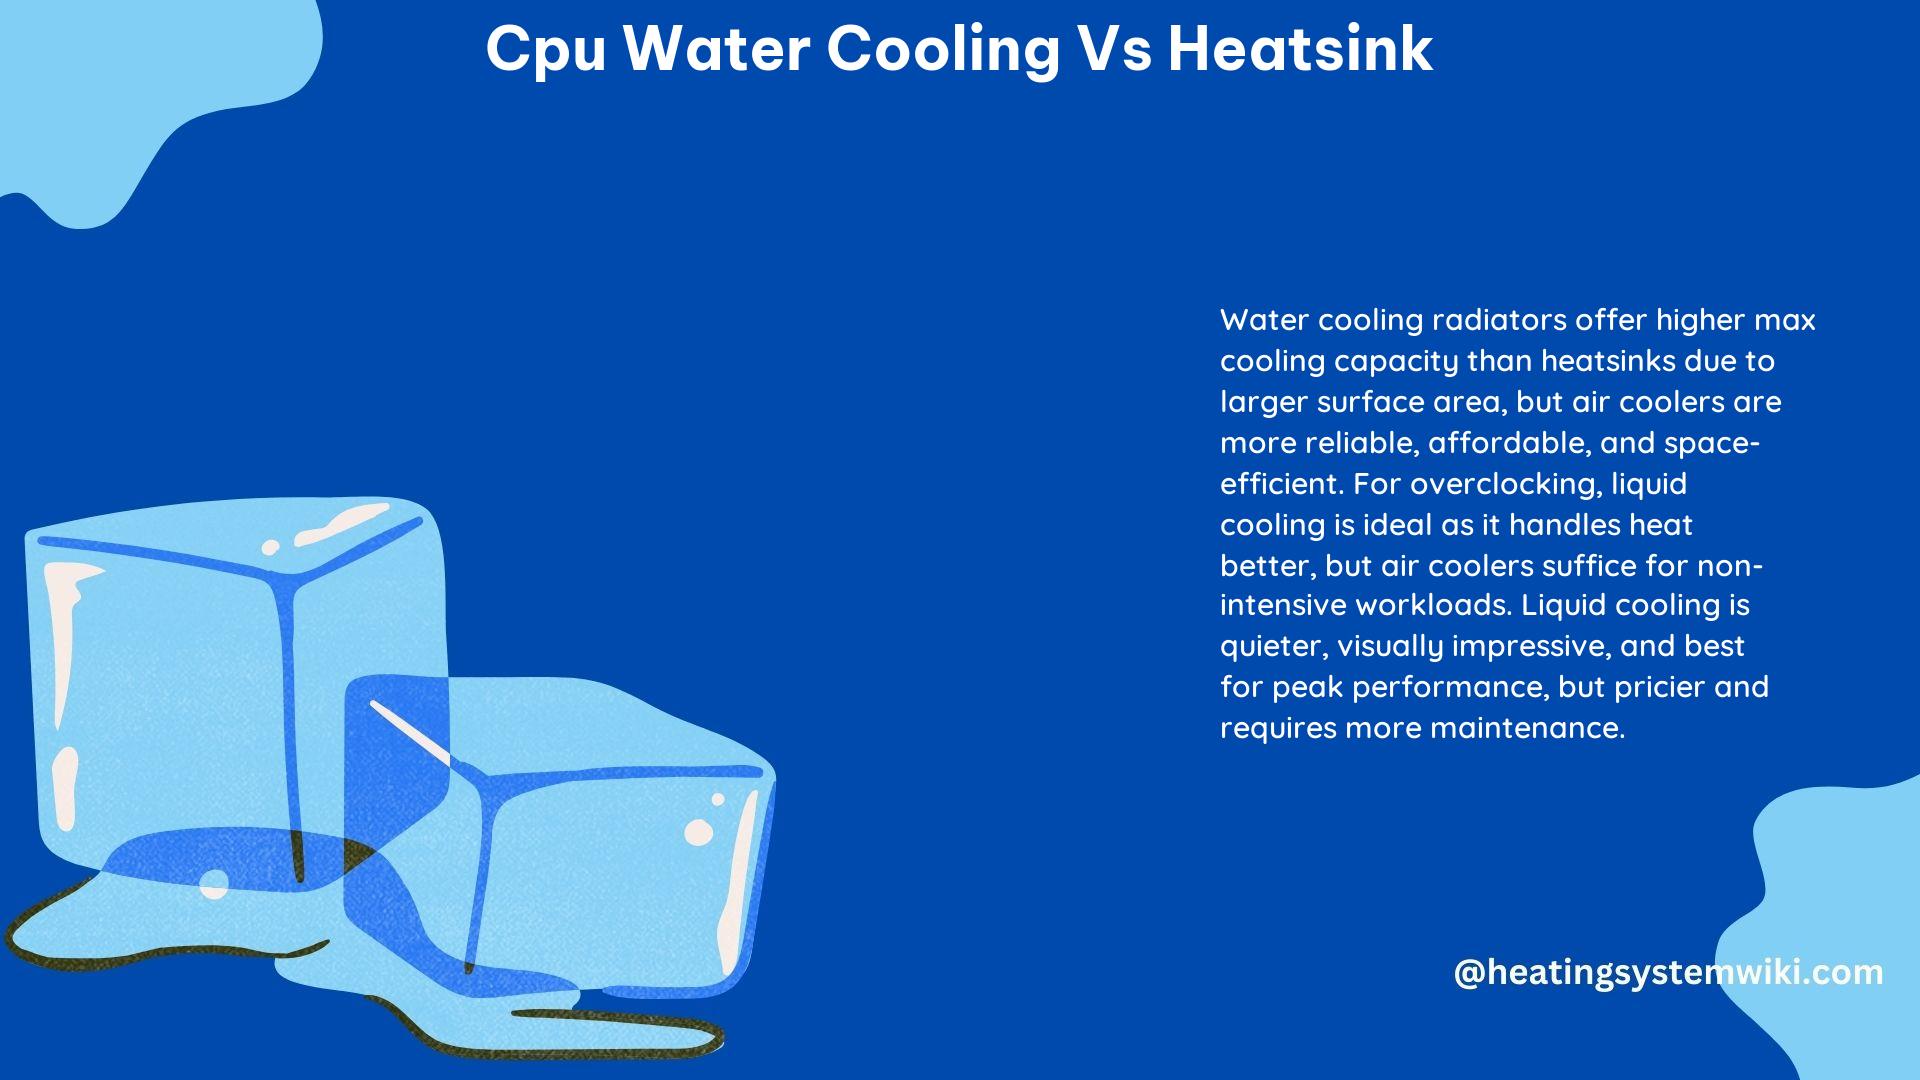 CPU Water Cooling vs Heatsink